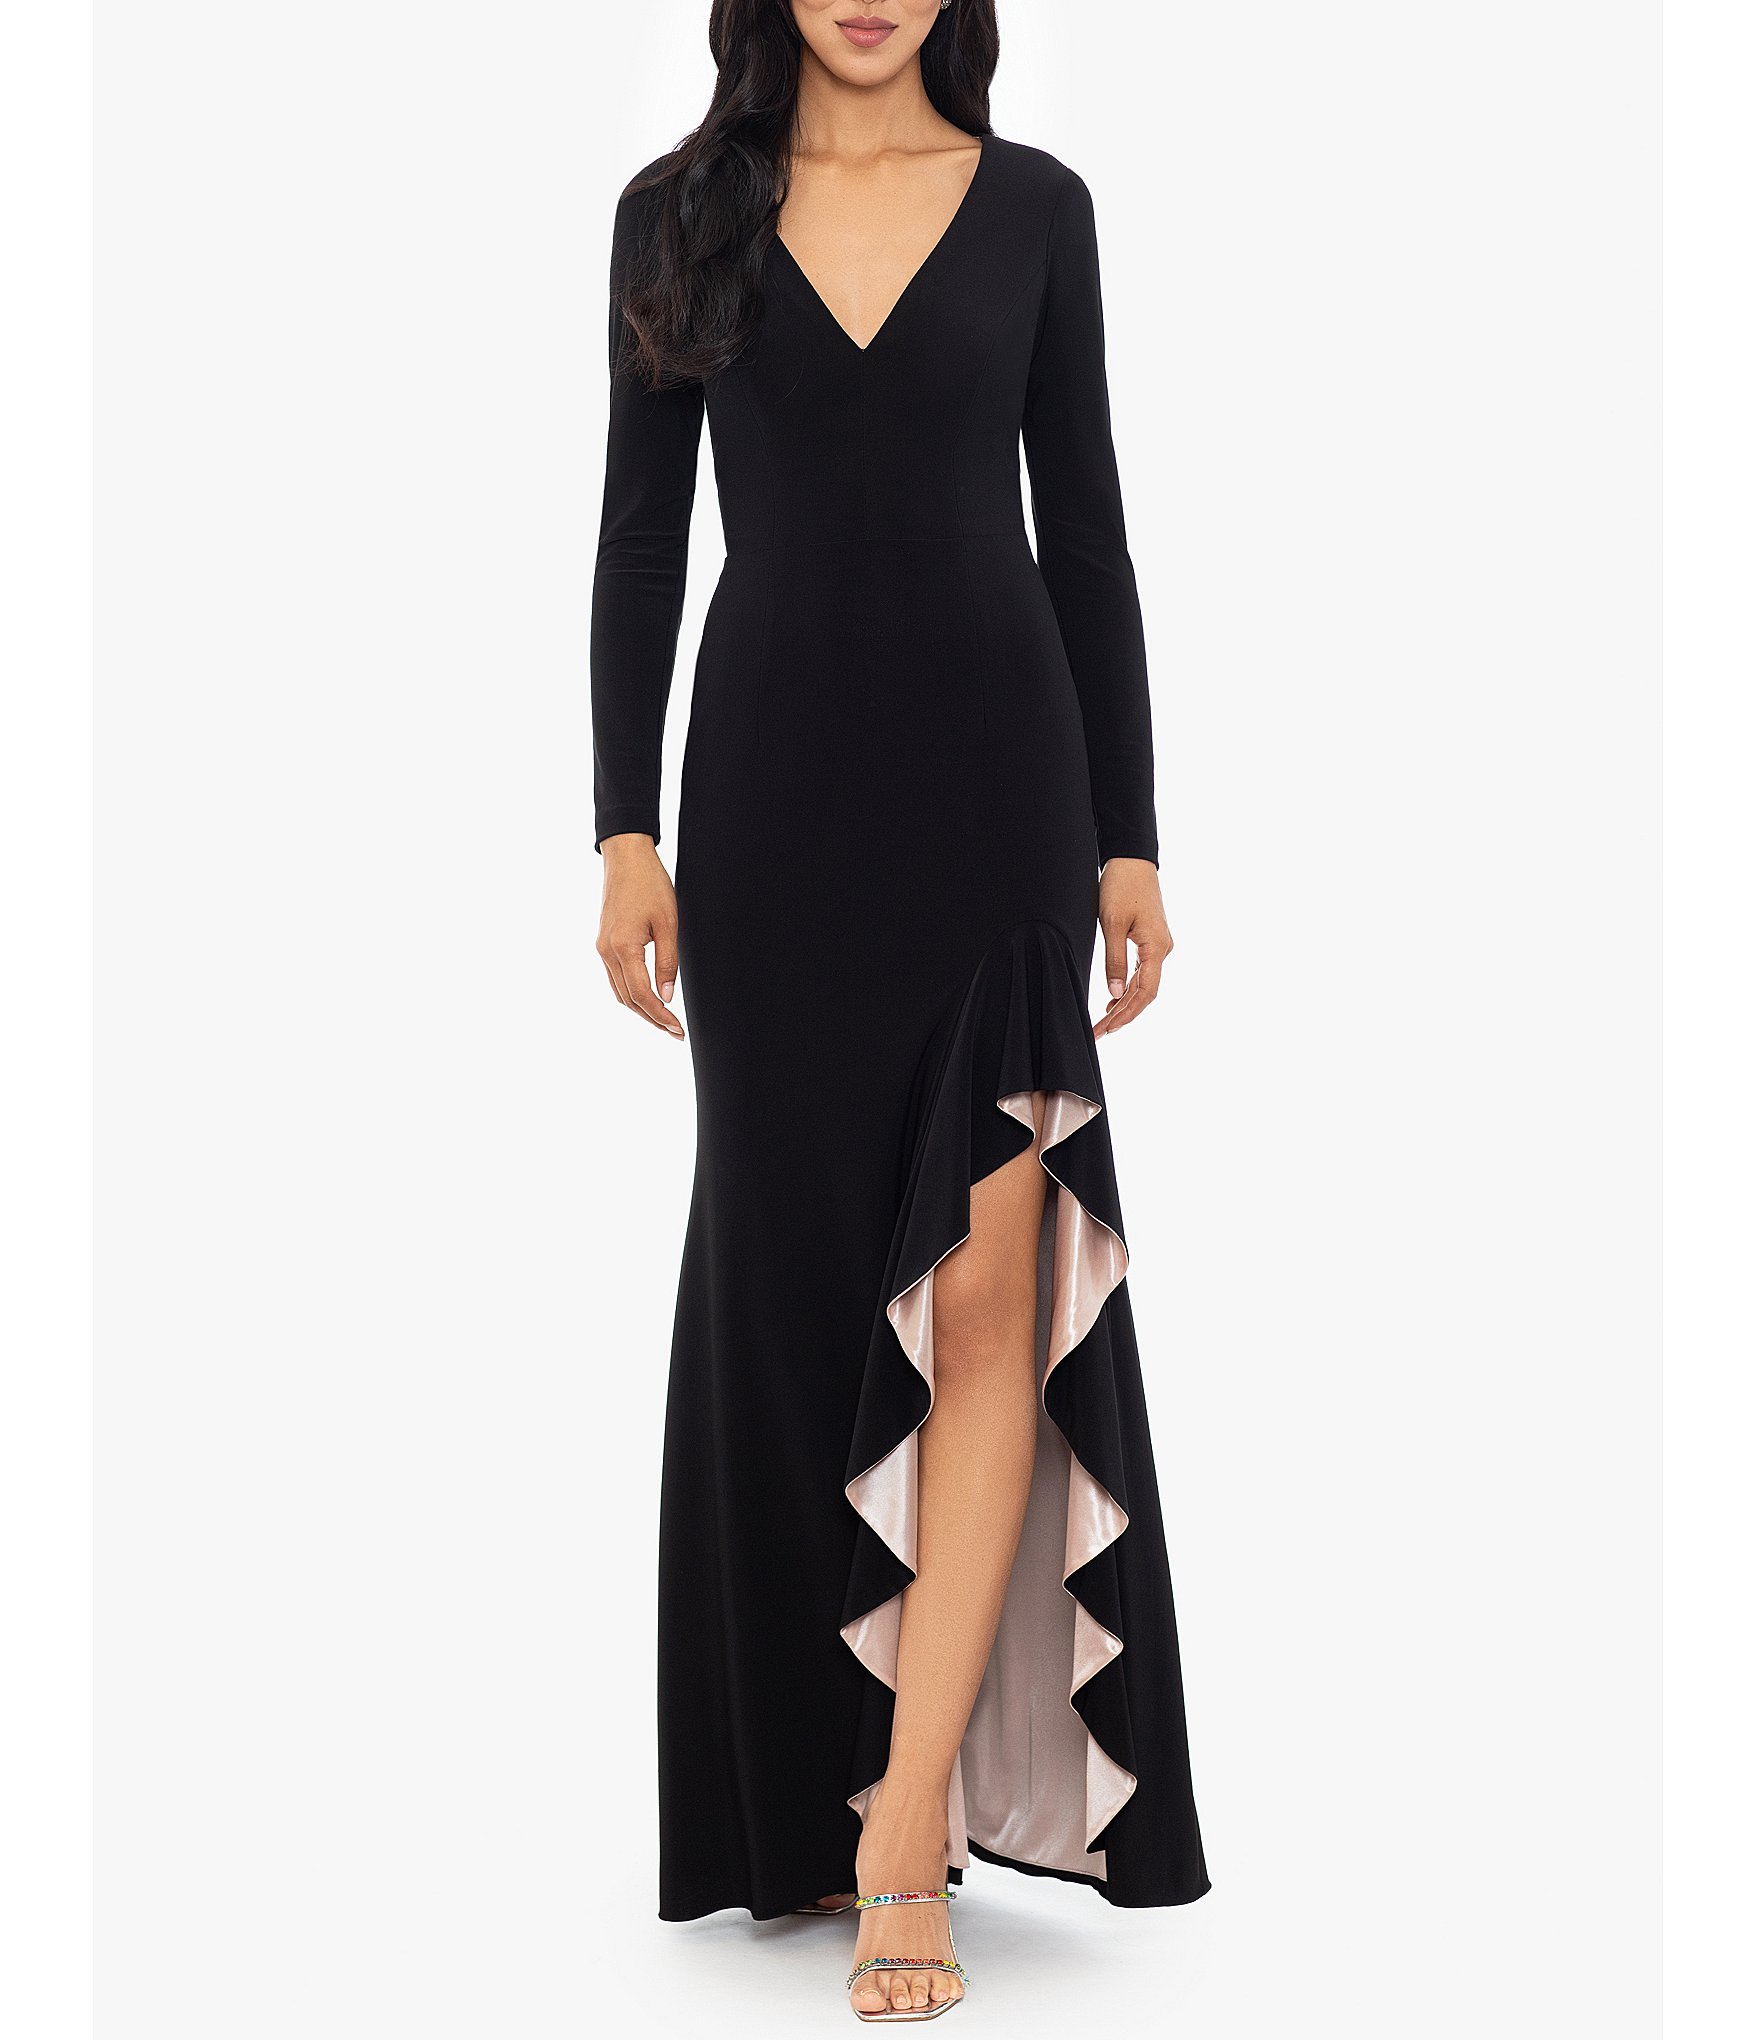 embellished: Women's Formal Dresses & Evening Gowns | Dillard's